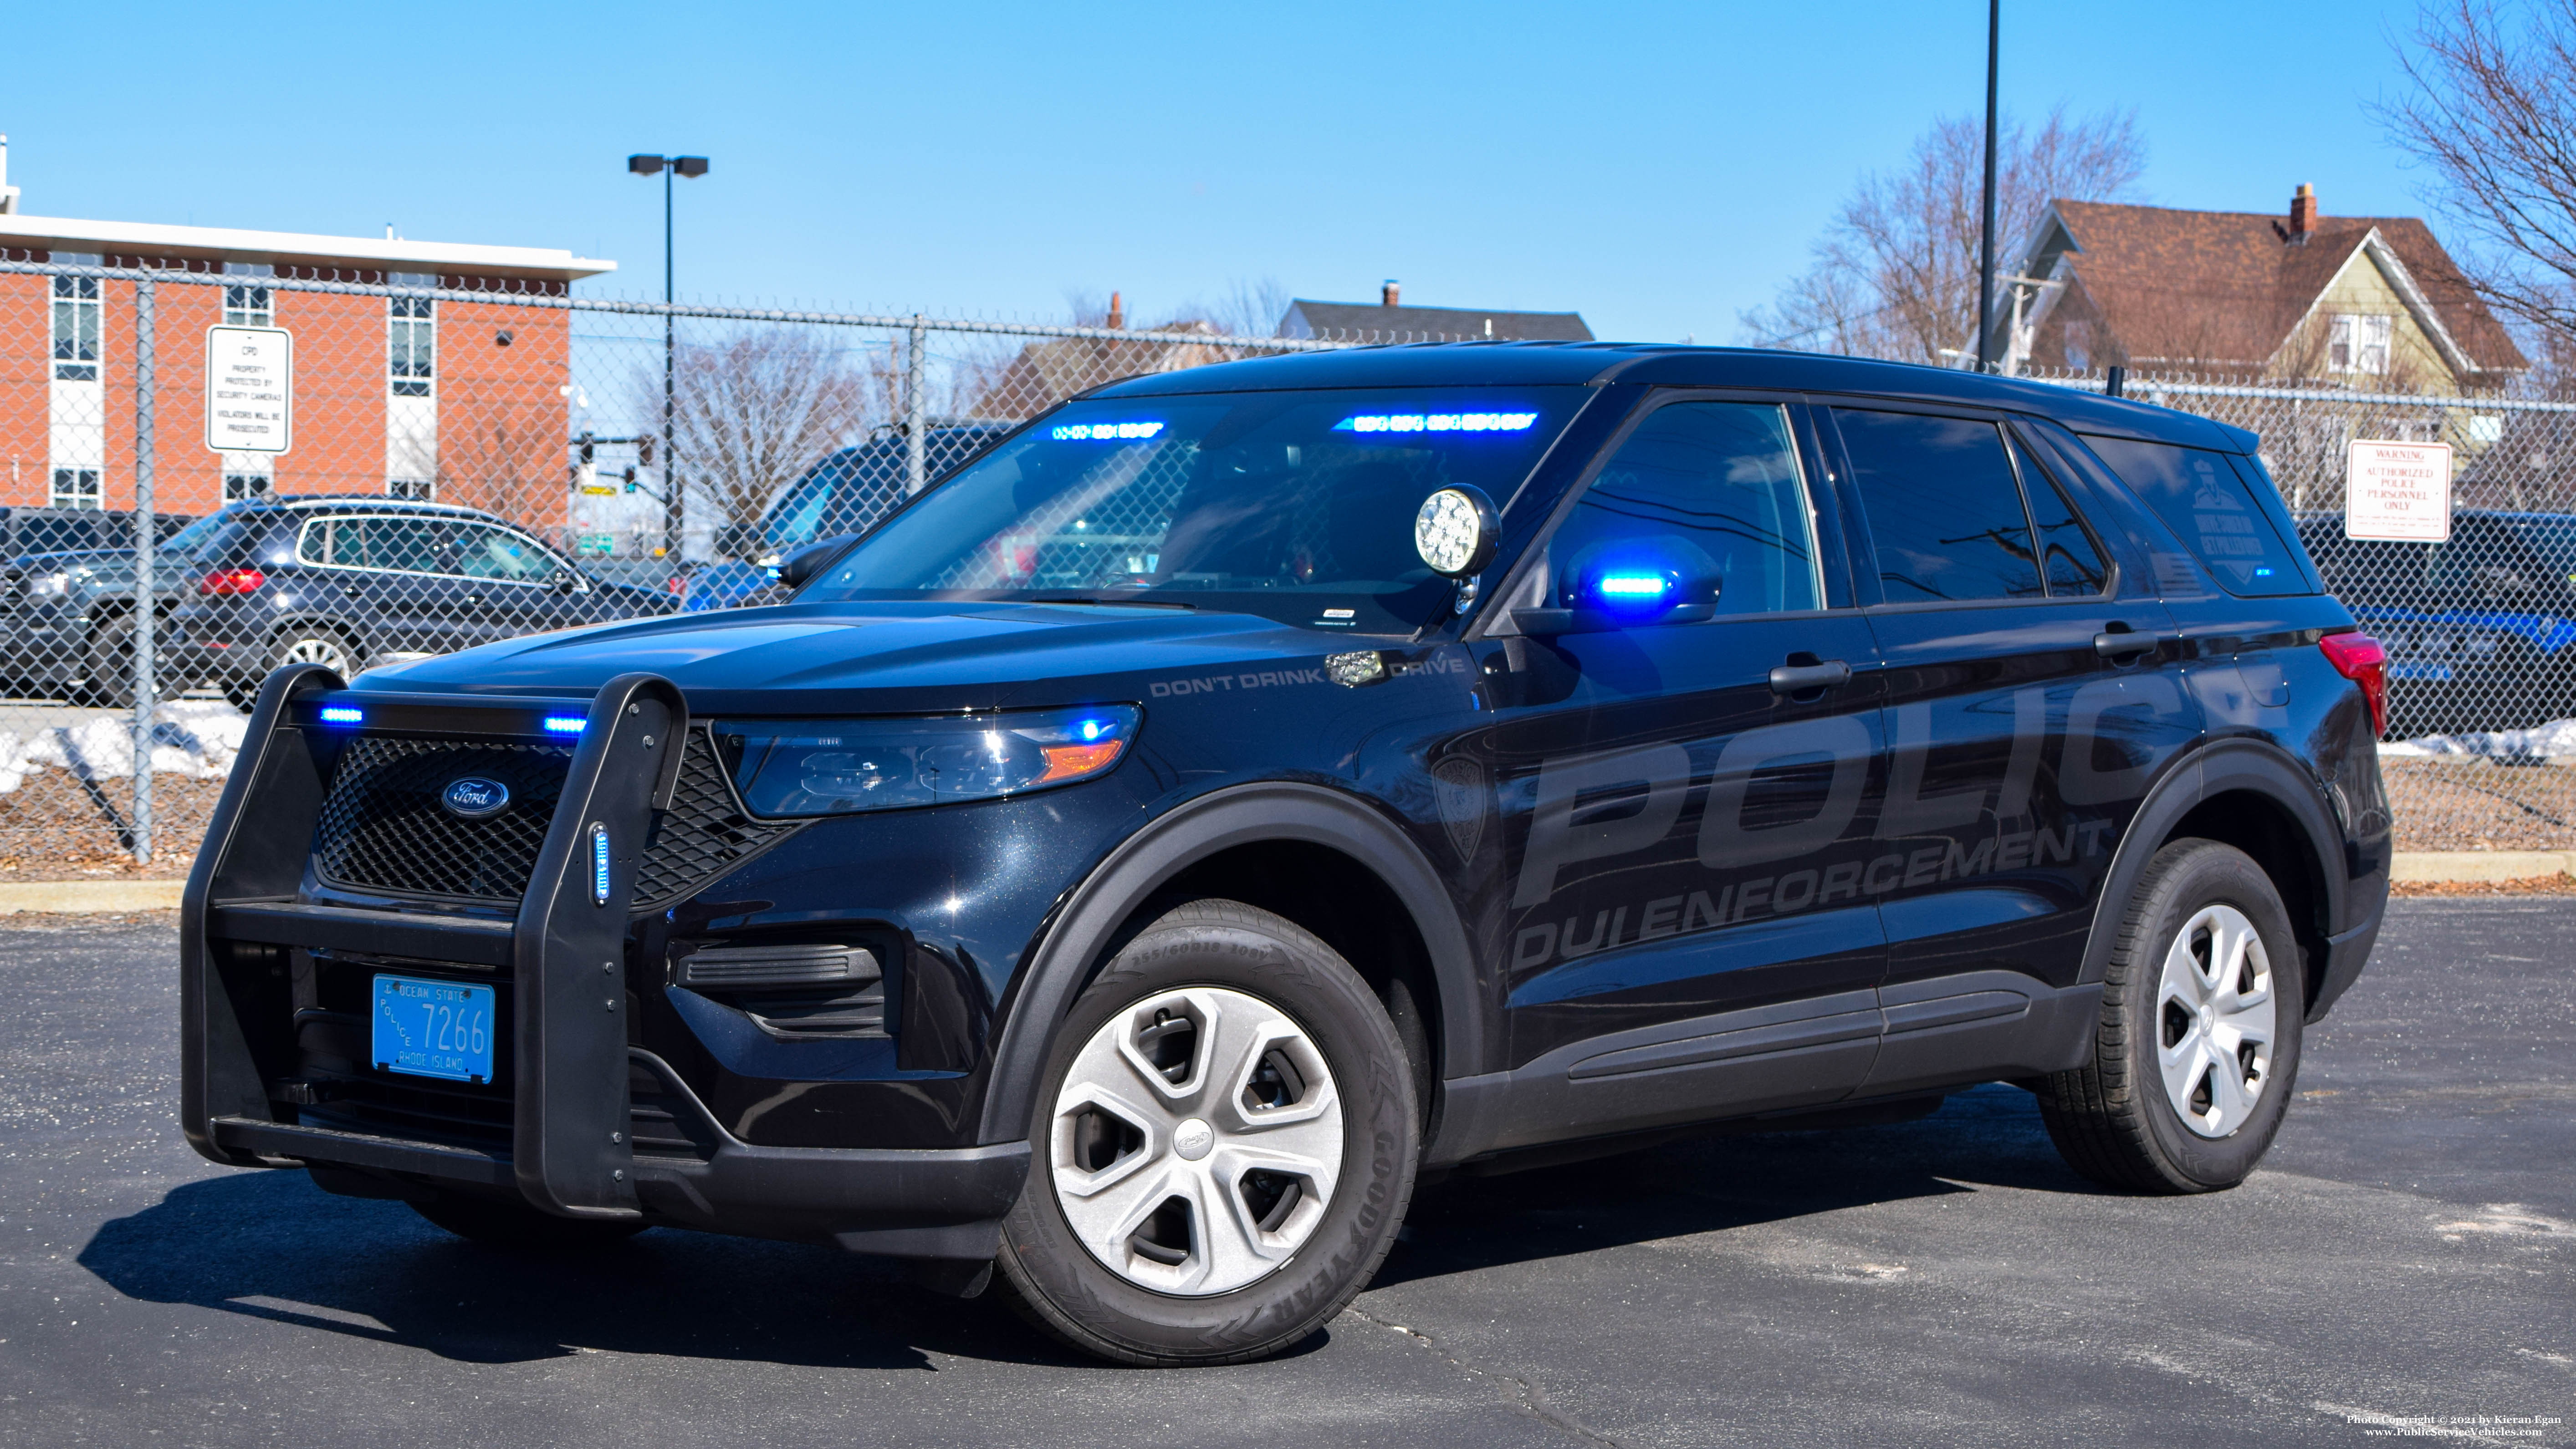 A photo  of Cranston Police
            DUI Enforcement Unit, a 2020 Ford Police Interceptor Utility             taken by Kieran Egan